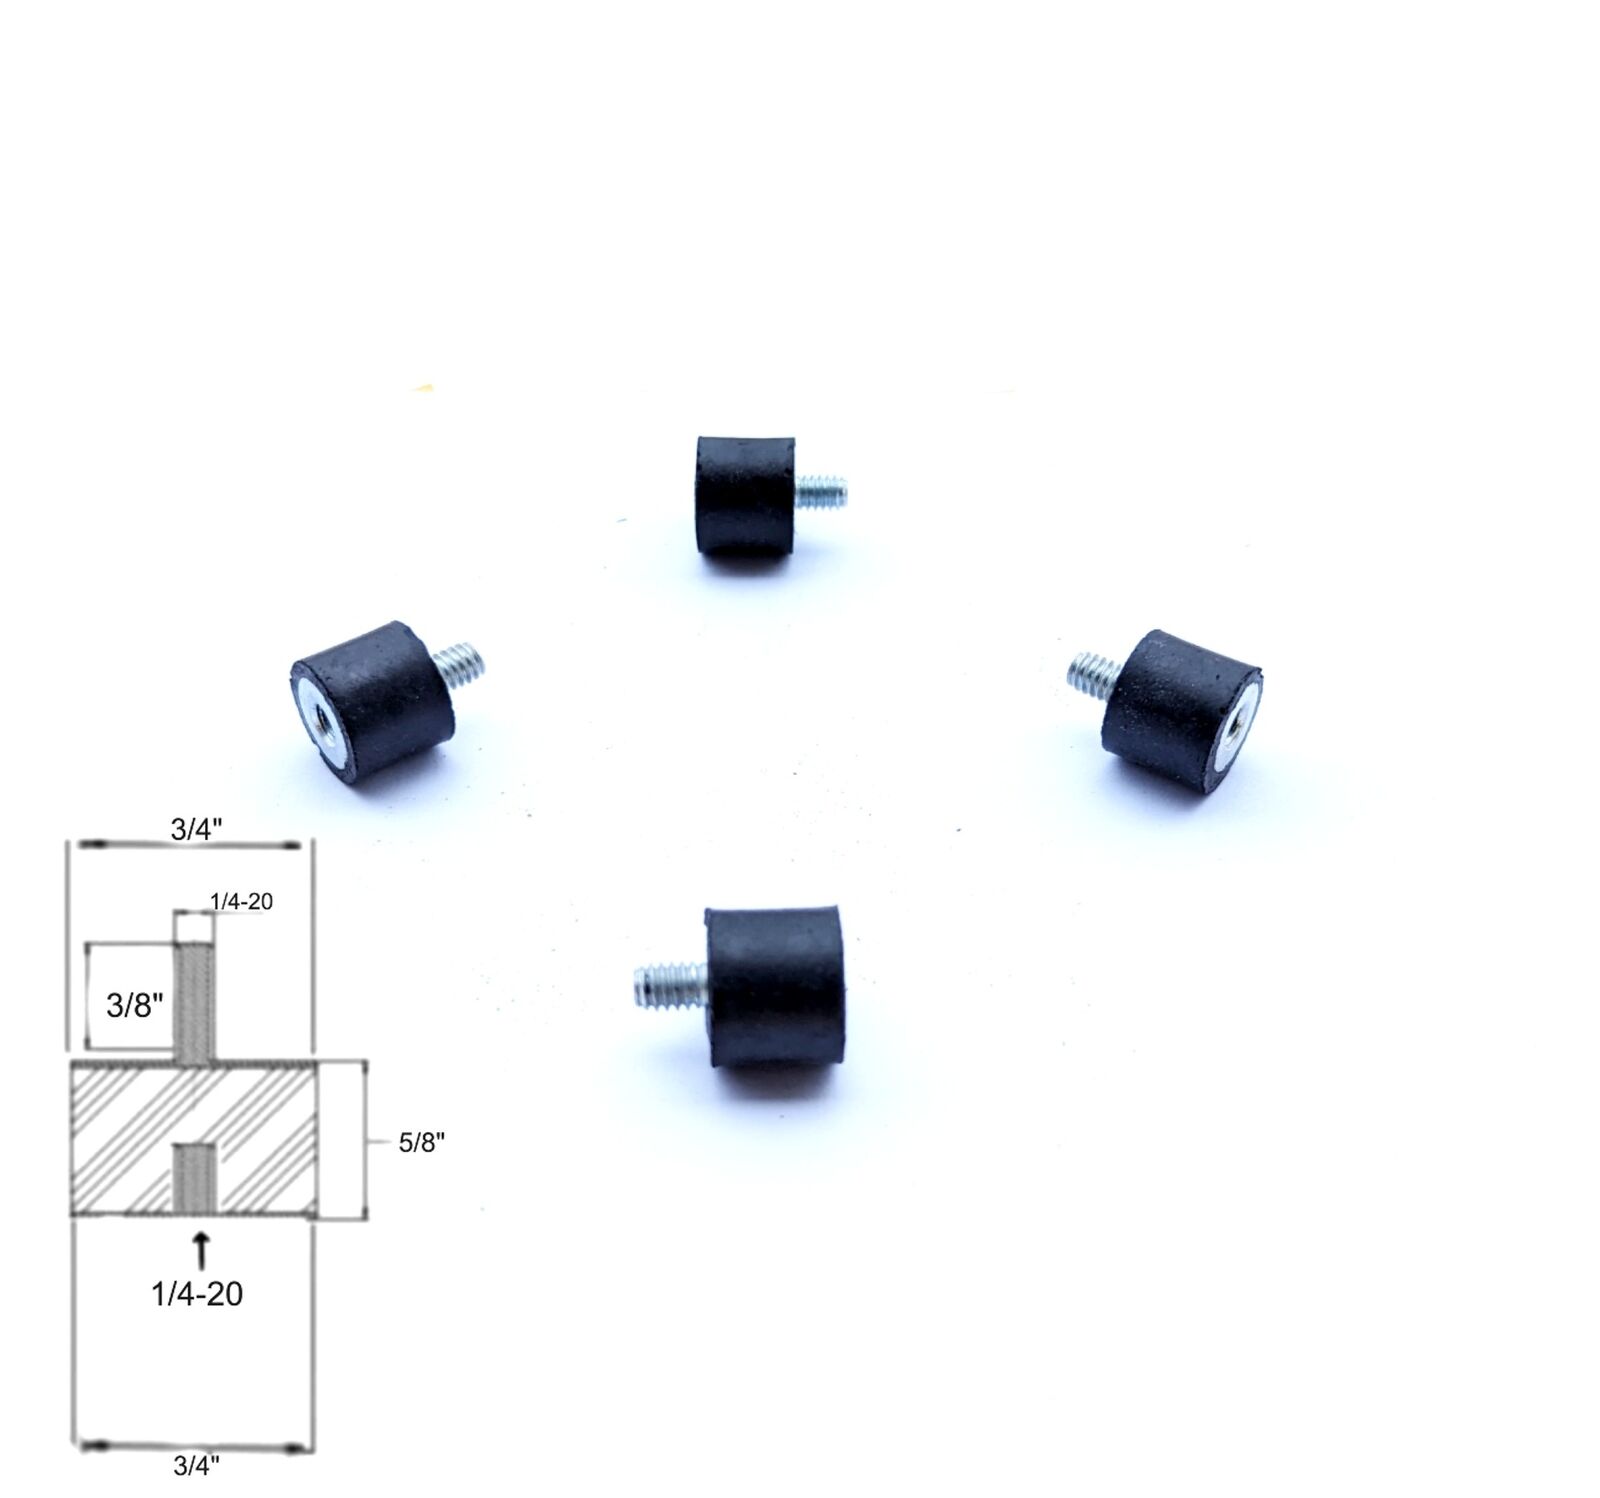 4 Rubber Vibration Isolator Mounts (3/4" Dia x 5/8" Thk) 1/4-20 x 3/8" Long Stud Elginscrewsandbolts Does Not Apply